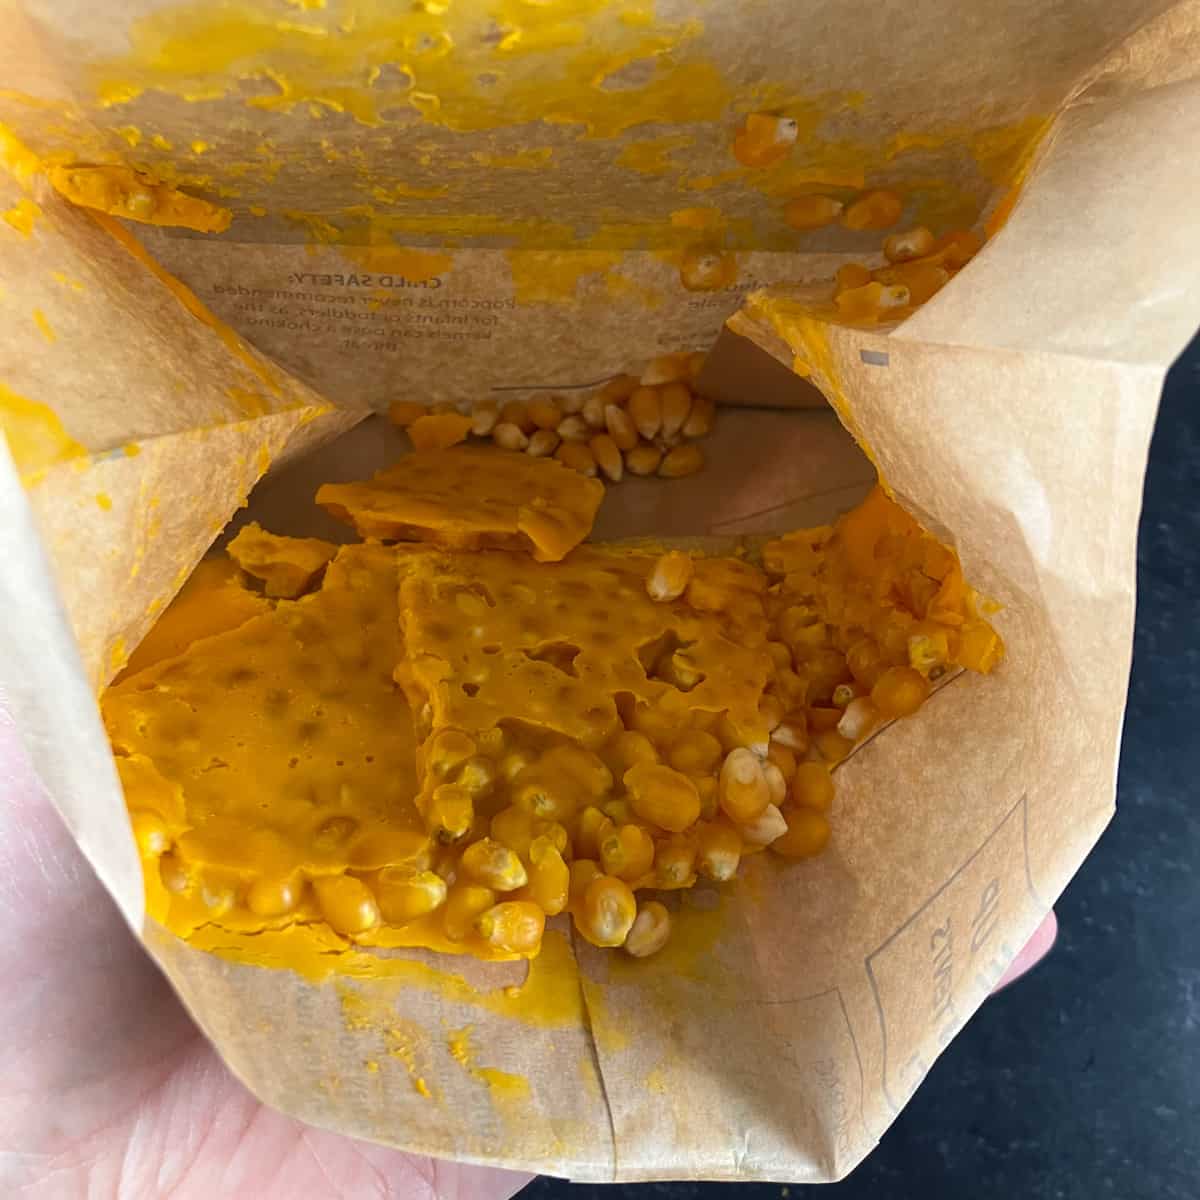 microwave popcorn kernels